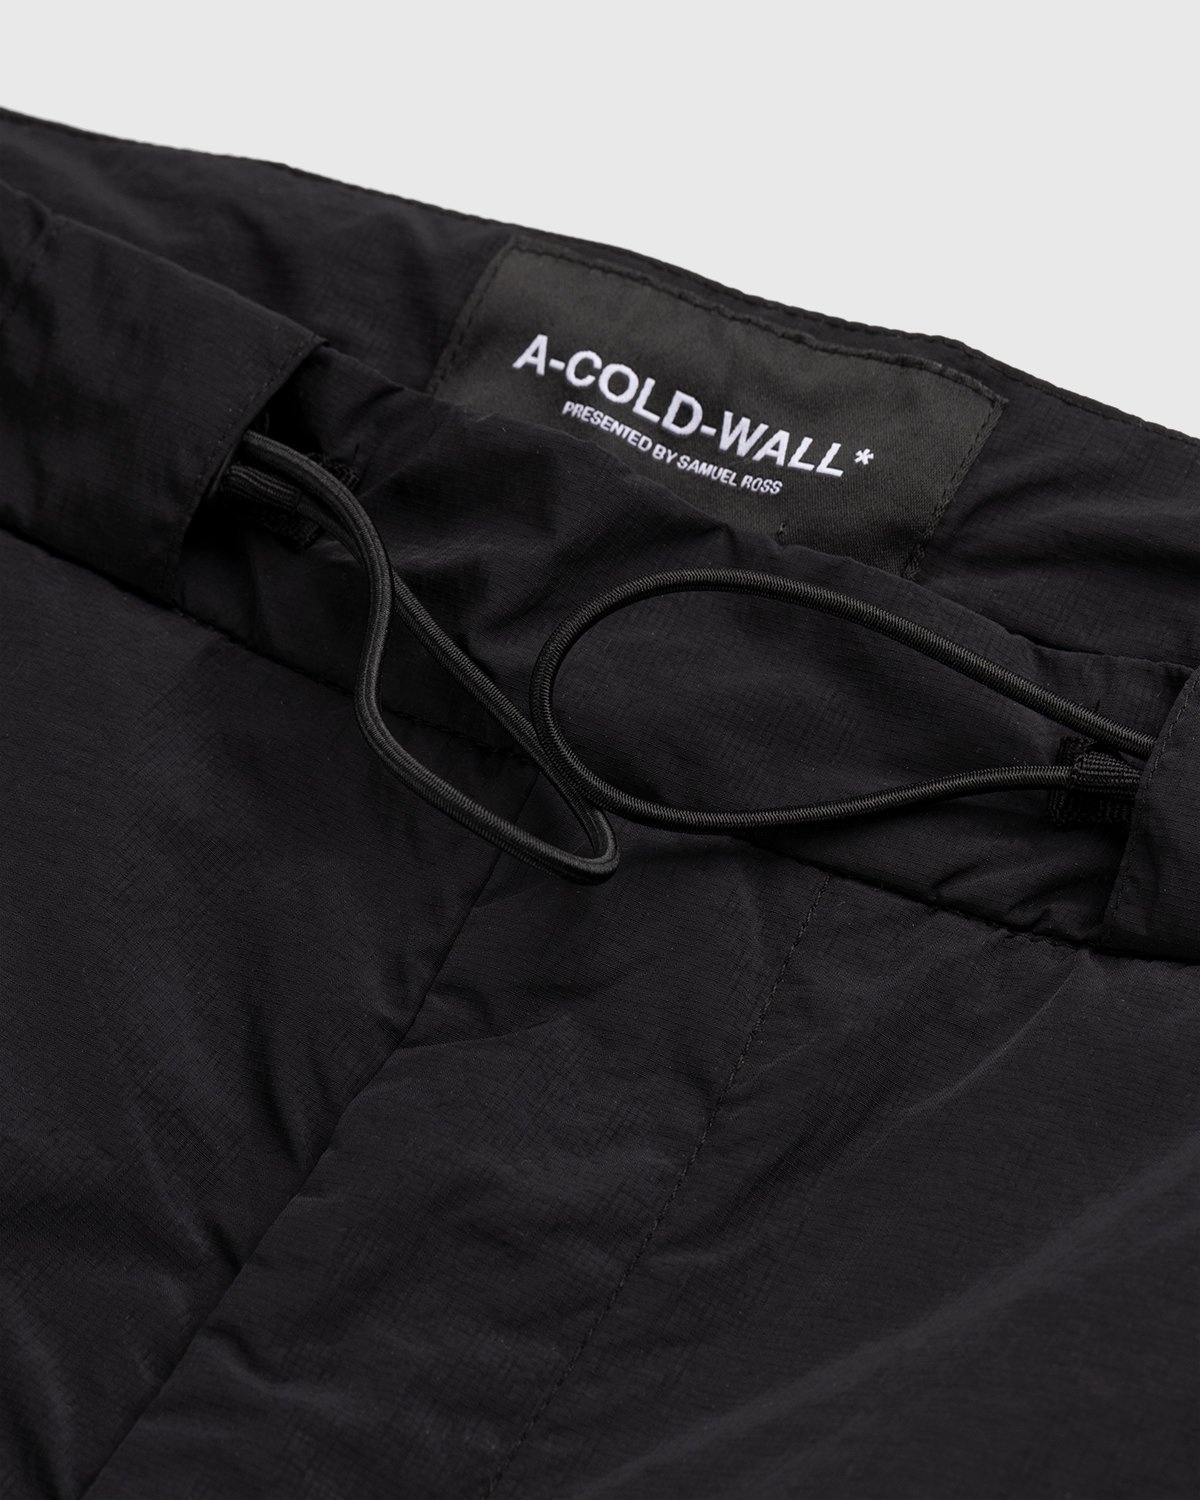 A-Cold-Wall* – Portage Pant Black - Pants - Black - Image 8